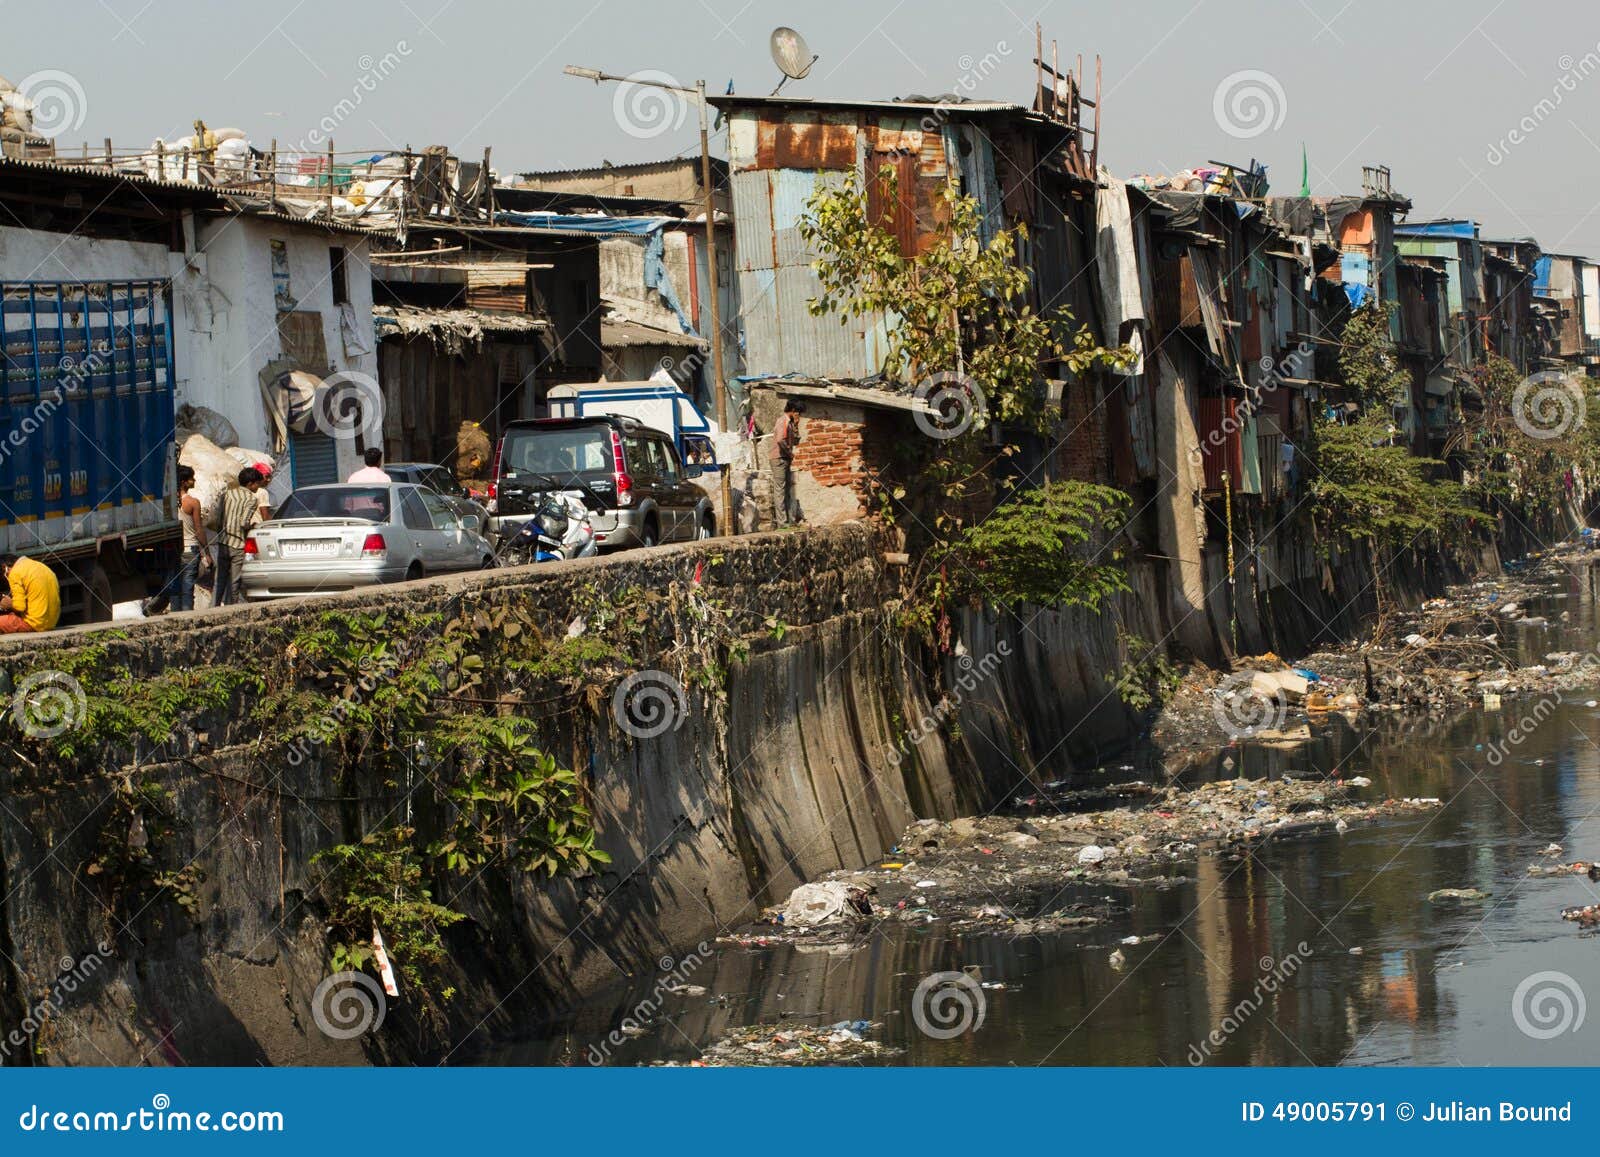 dharavi-slums-mumbai-india-population-reaching-nearly-million-classed-as-one-49005791.jpg